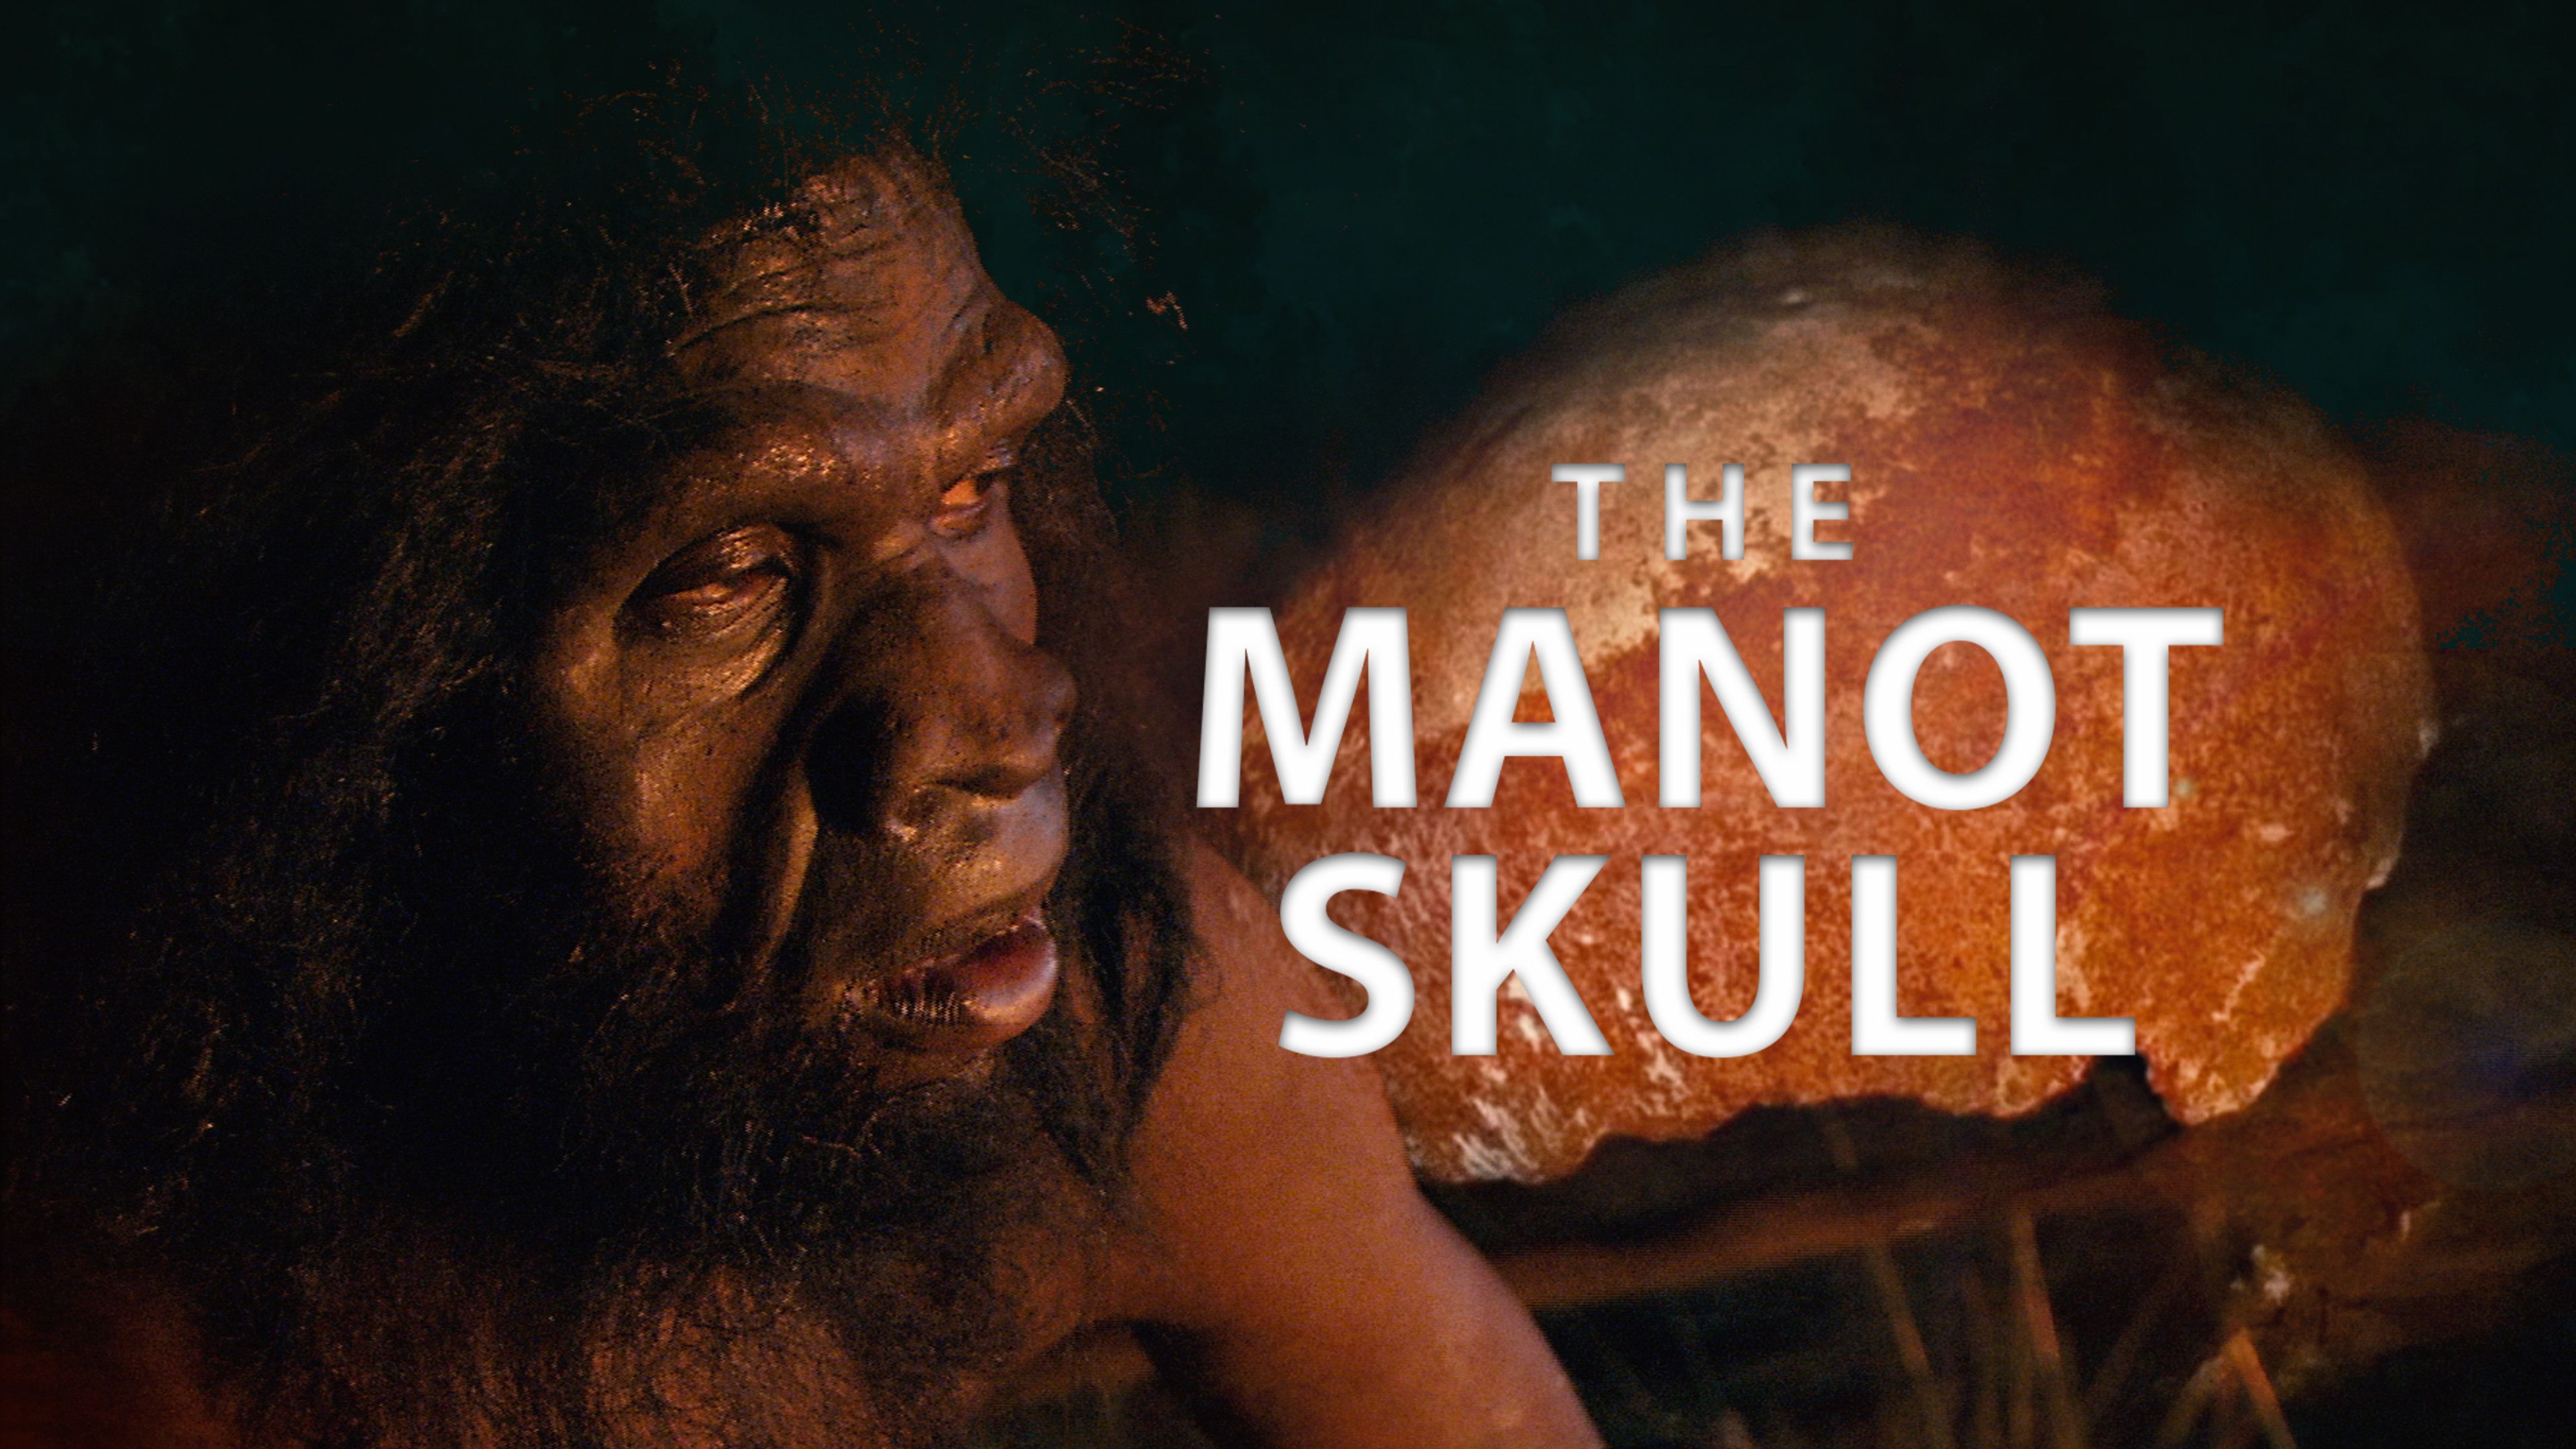 The Manot Skull